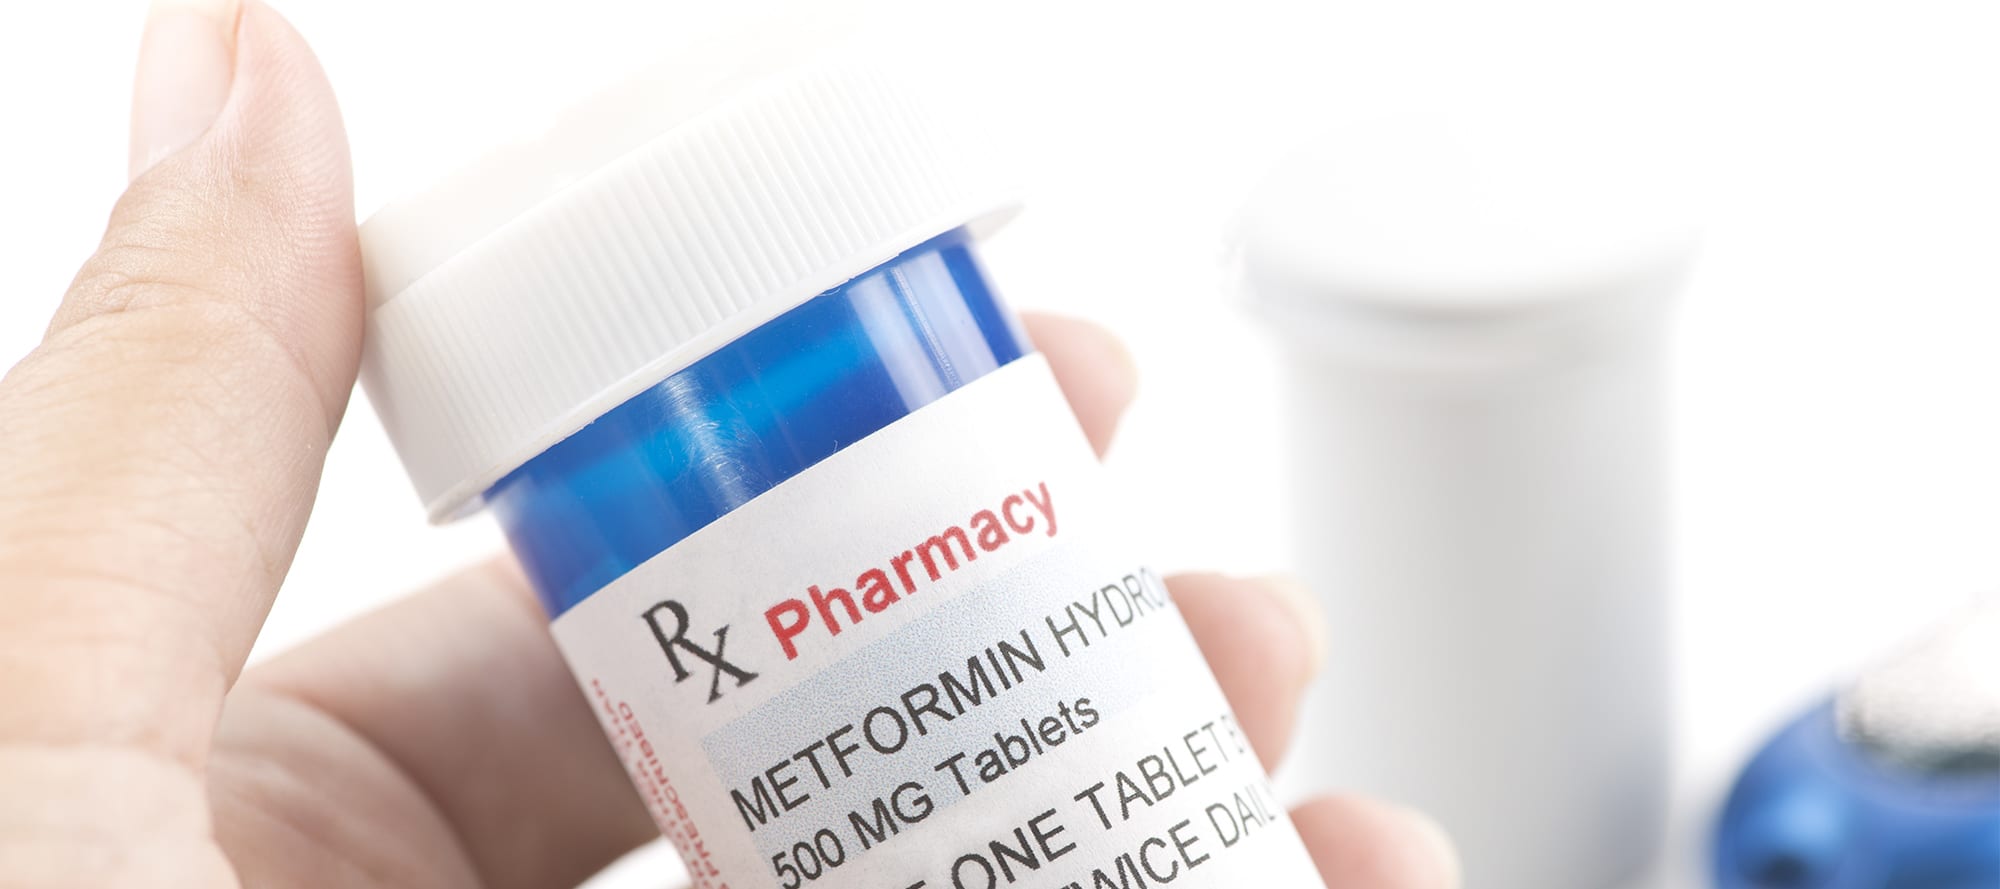 Metformin Pill Bottle